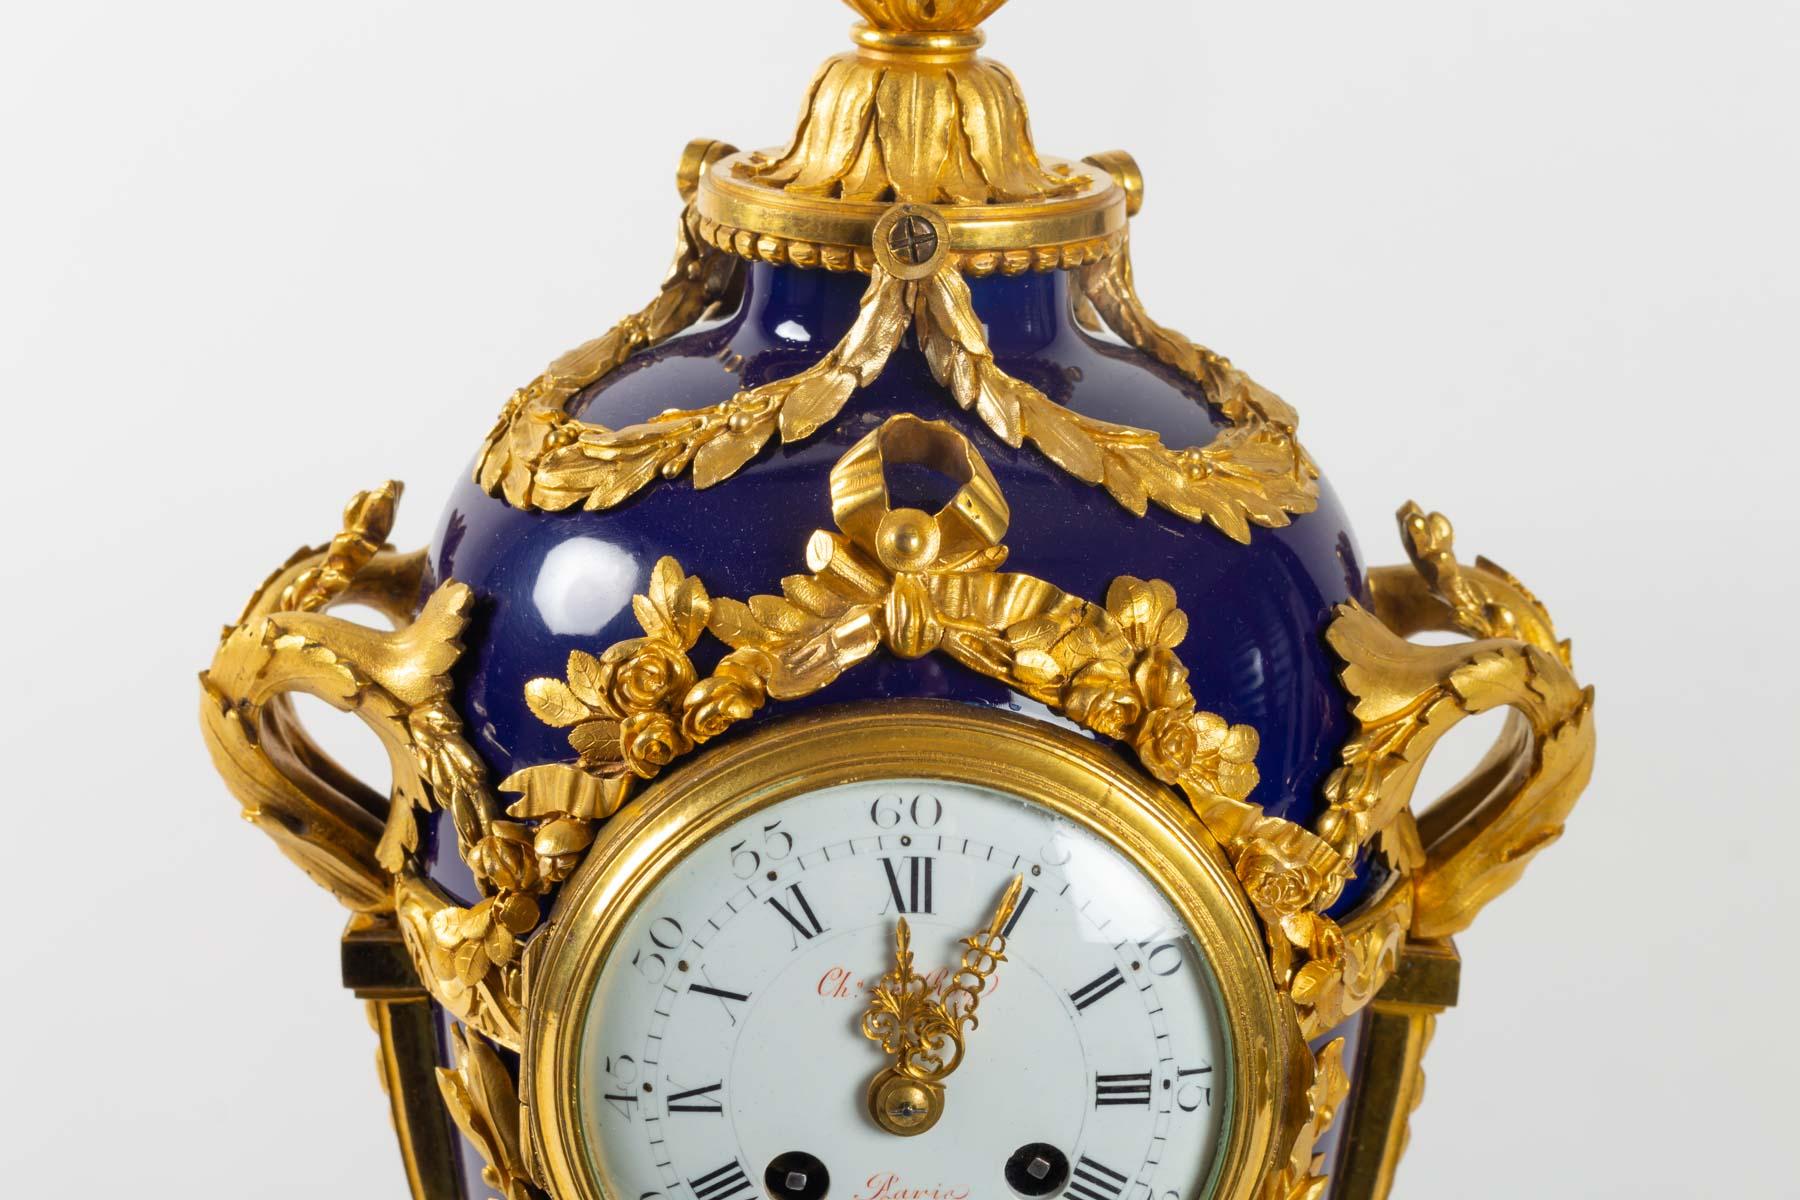 European Superb Clock, Giltbronze and Blue Enamel by Beurdeley, Paris, France, circa 1850 For Sale